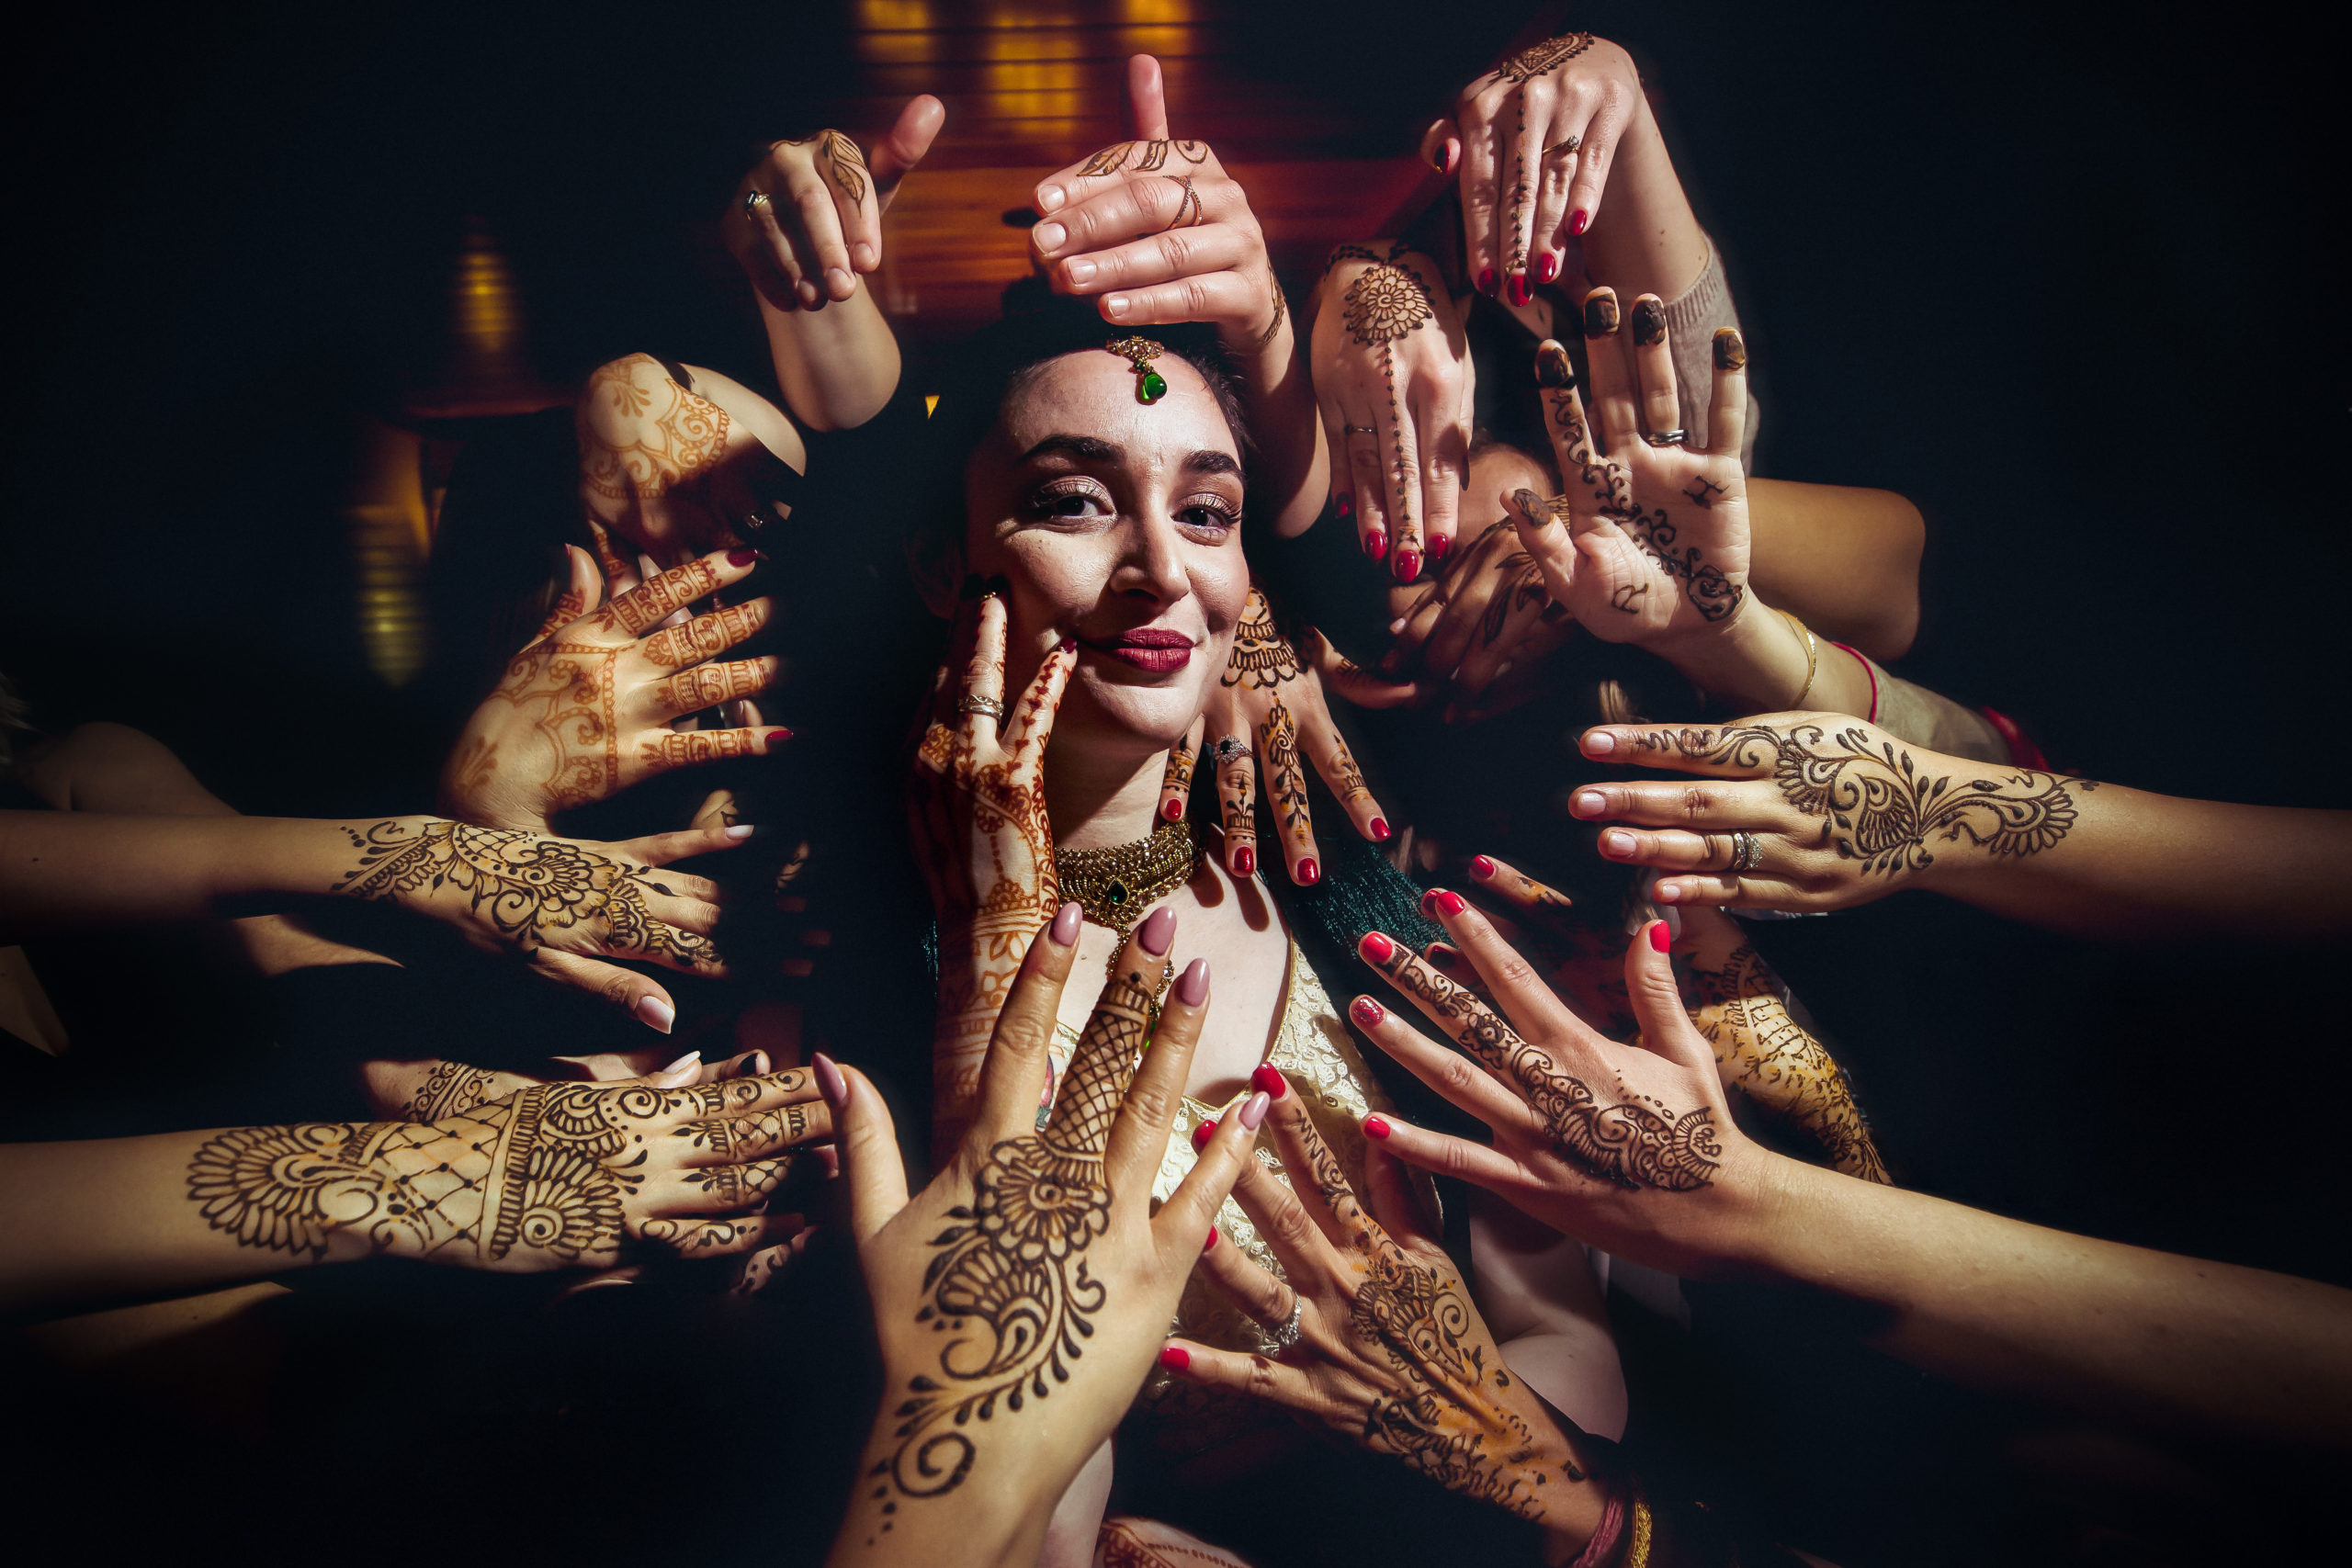 Trending Mehndi Photoshoot Ideas For An Insta-Worthy Wedding Post